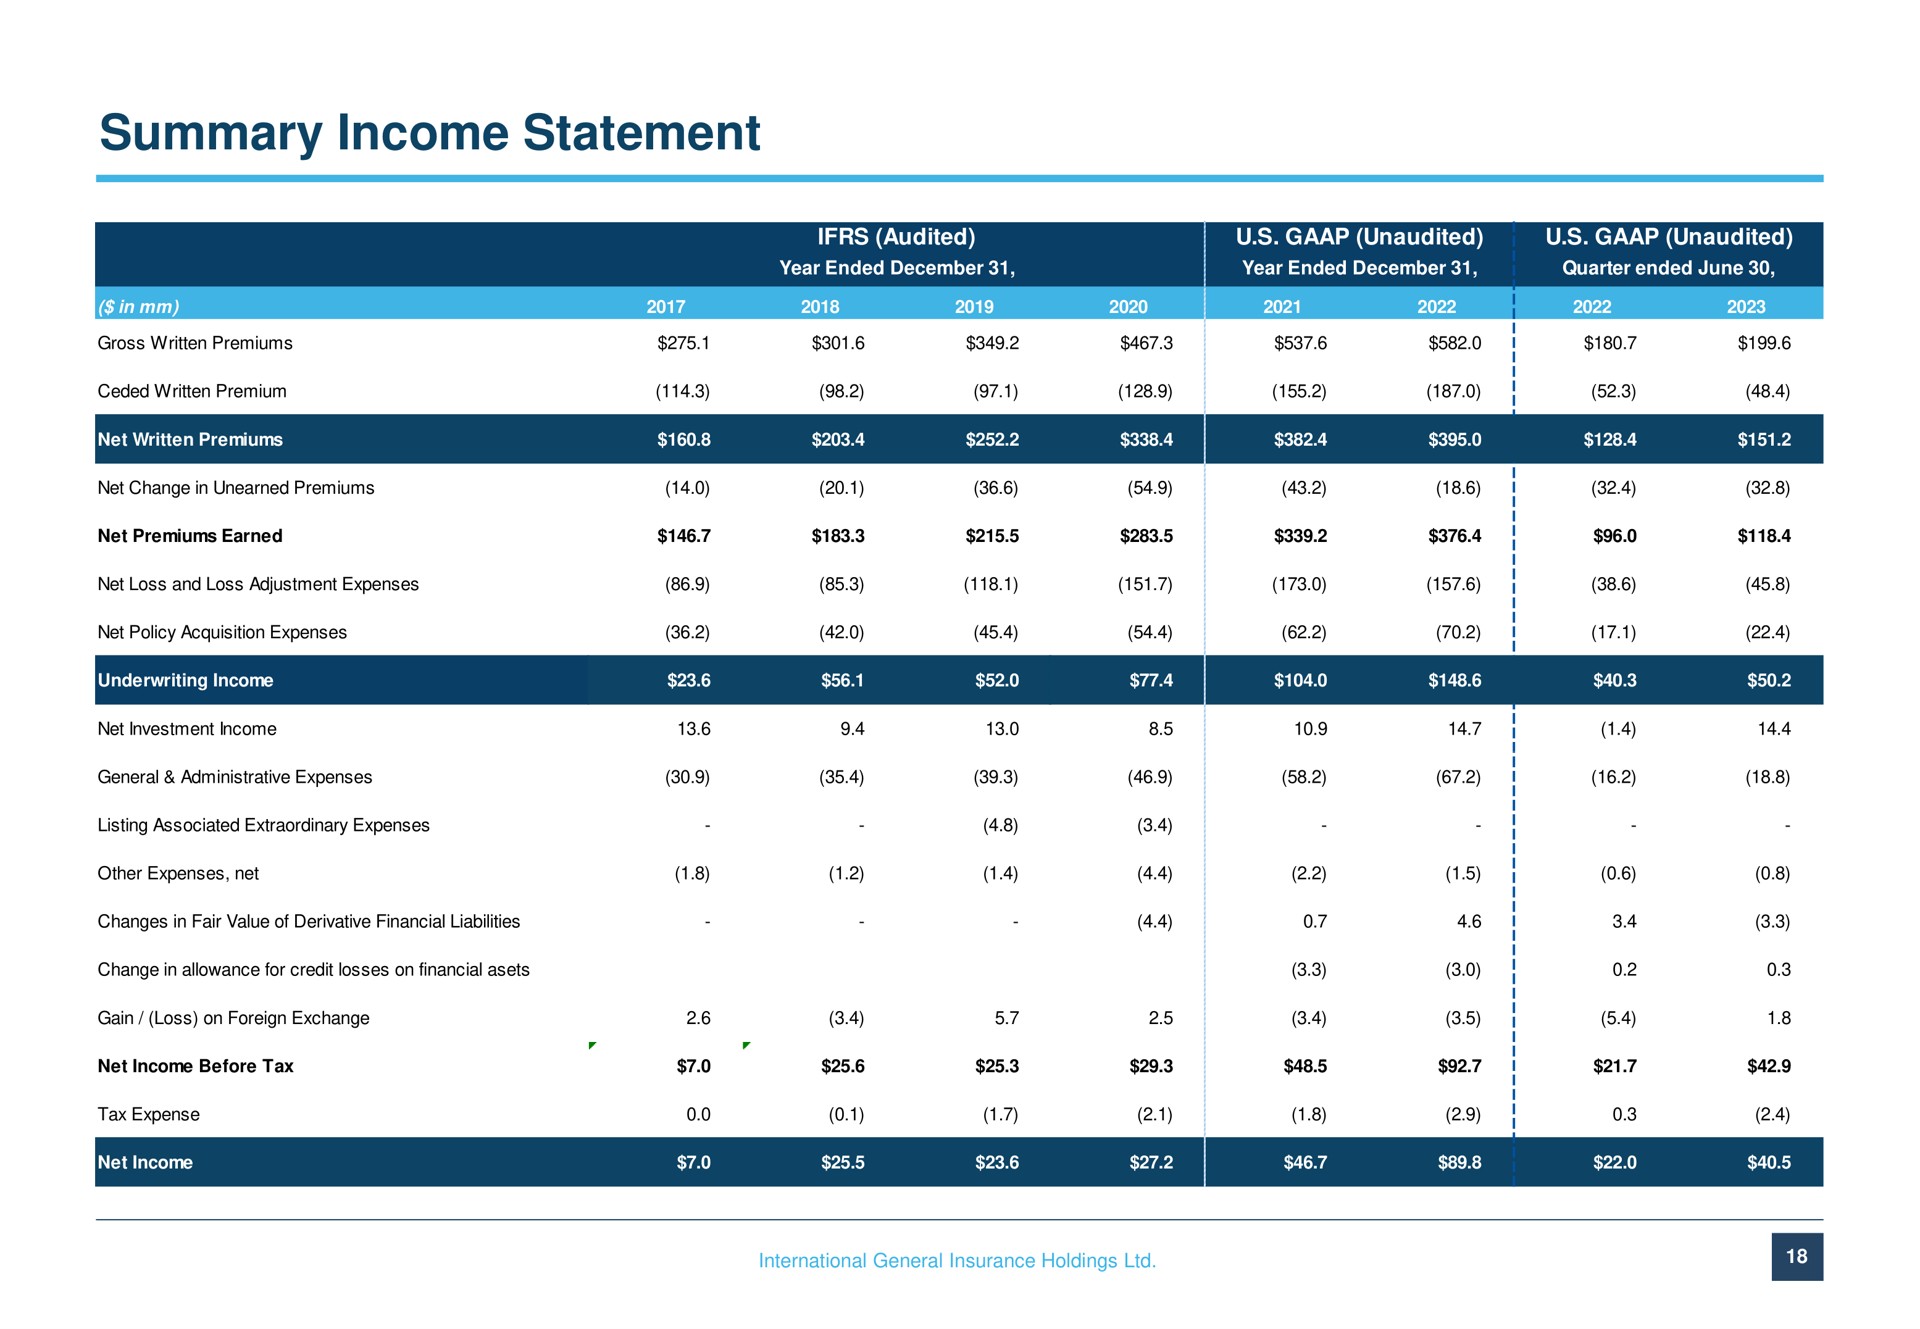 summary income statement | International General Insurance